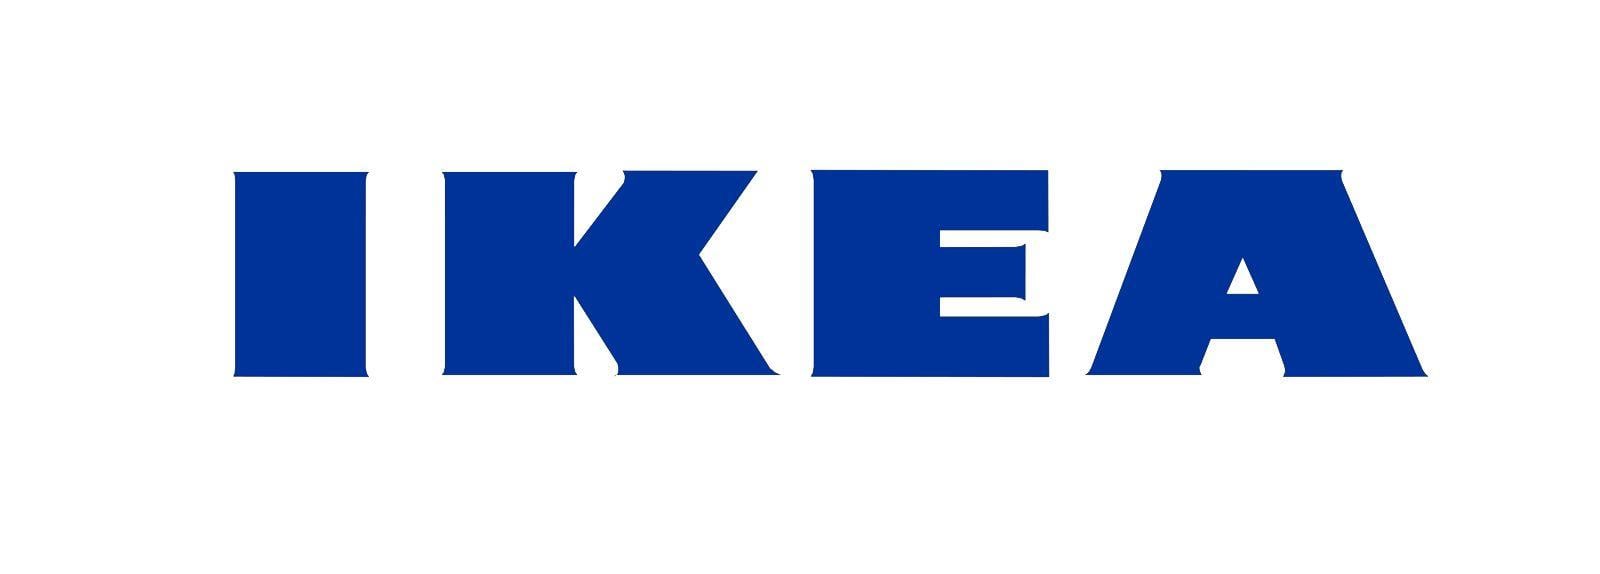 Ikea Logo - IKEA Logo, IKEA Symbol Meaning, History and Evolution | Breakfast ...